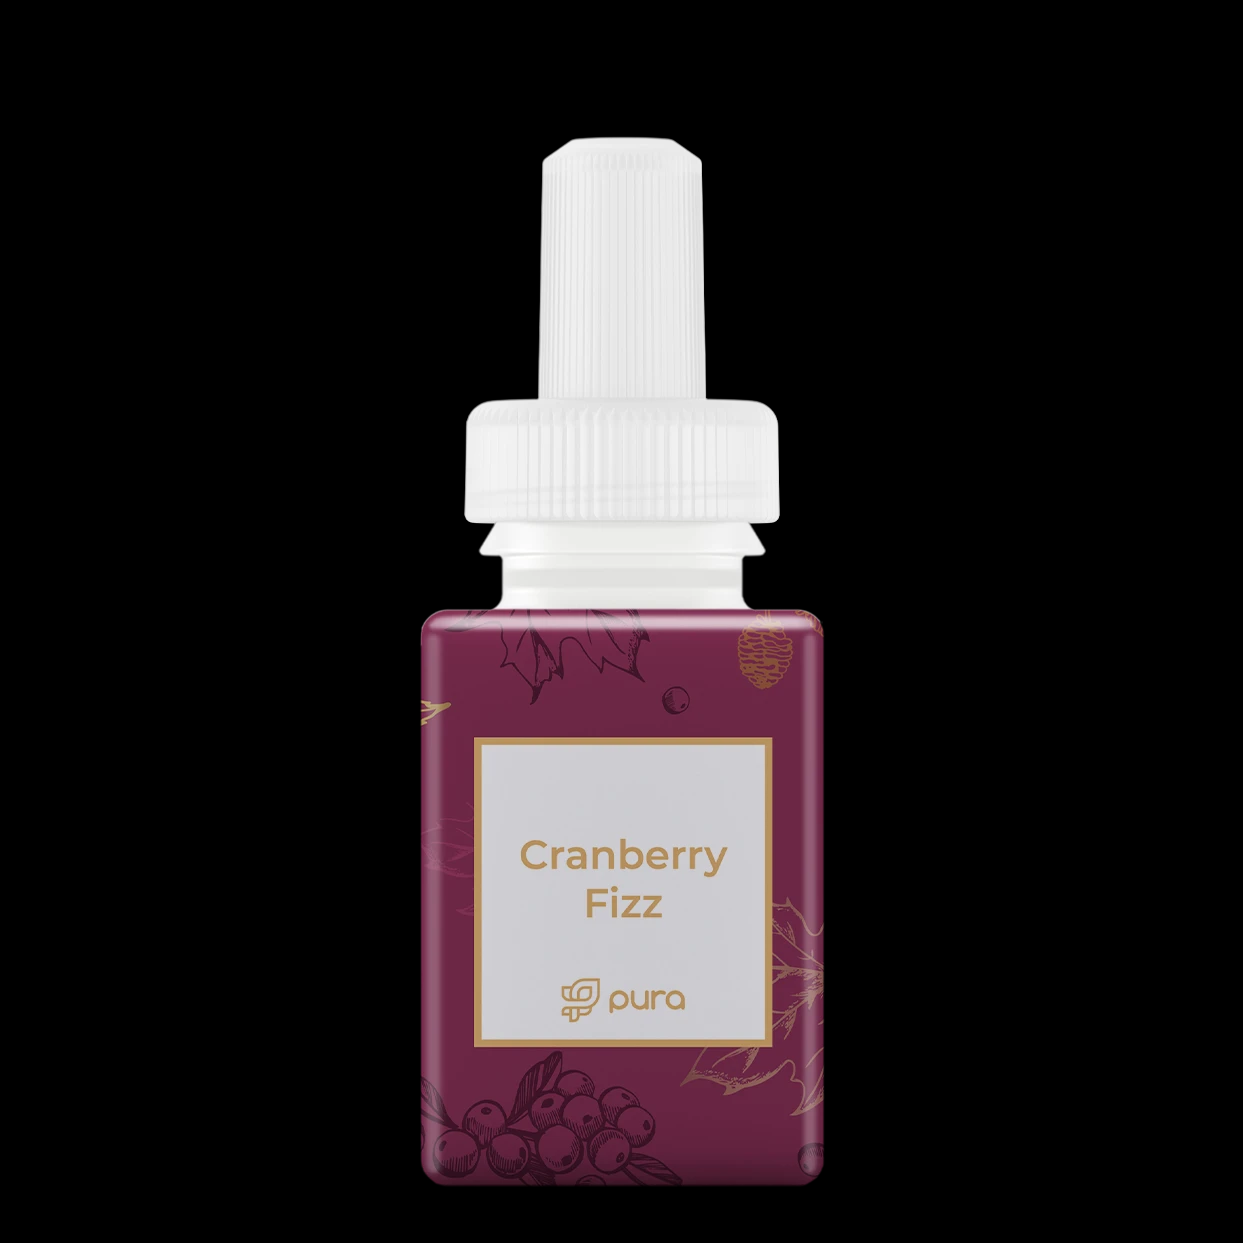 Pura Fragrance - Cranberry Fizz